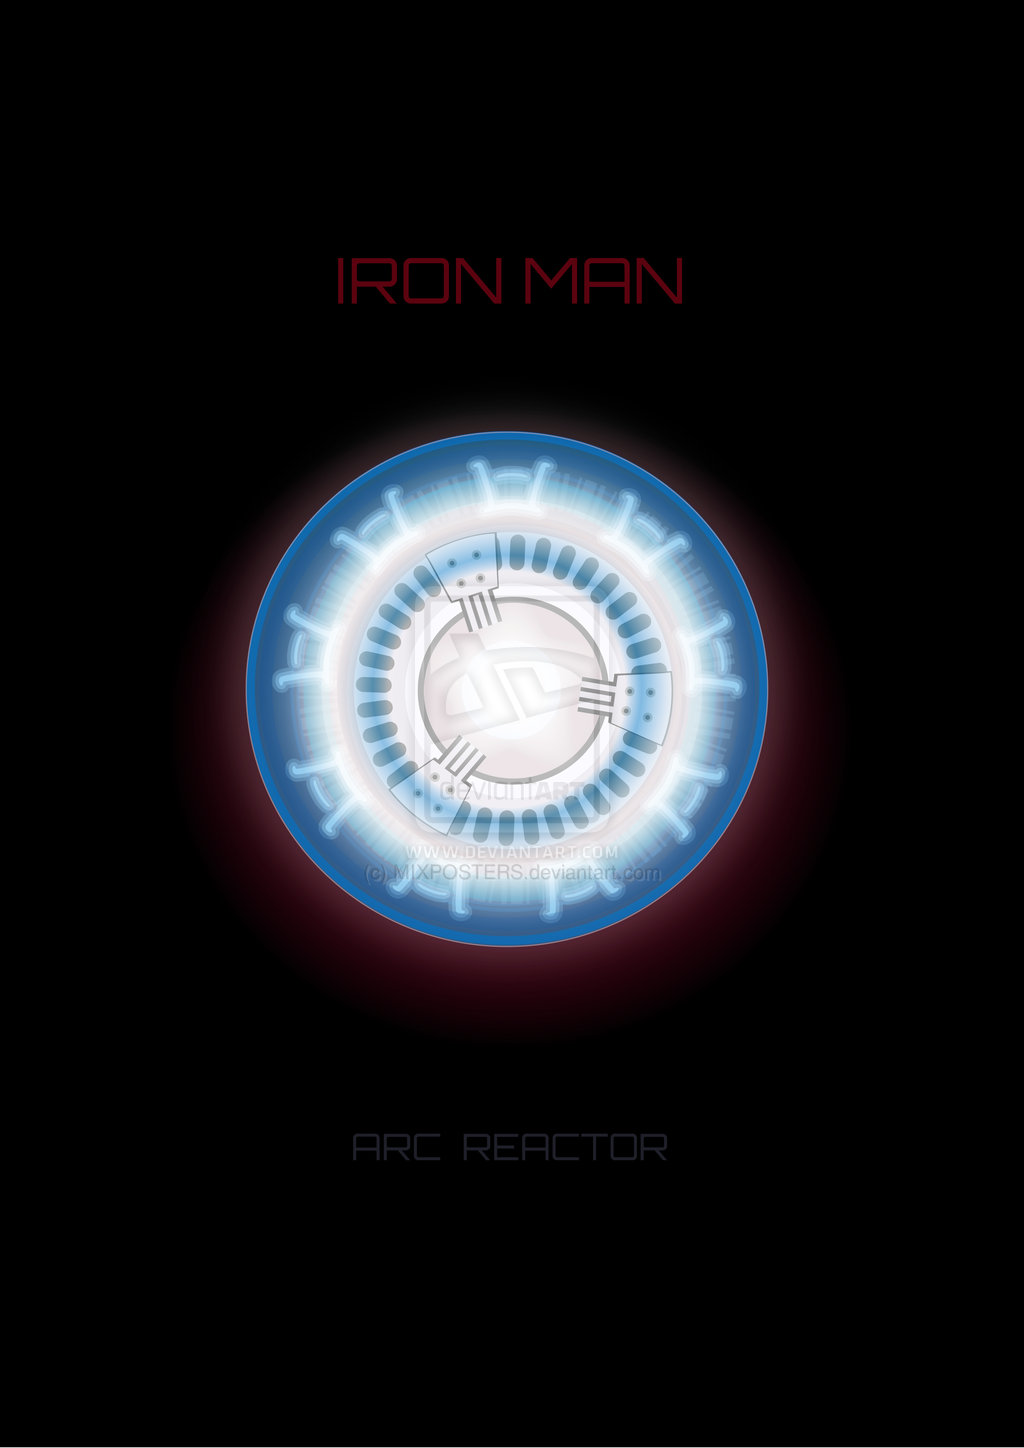 Ironman Arc Reactor Wallpaper Hd Iron man   arc reactor poster 1024x1448